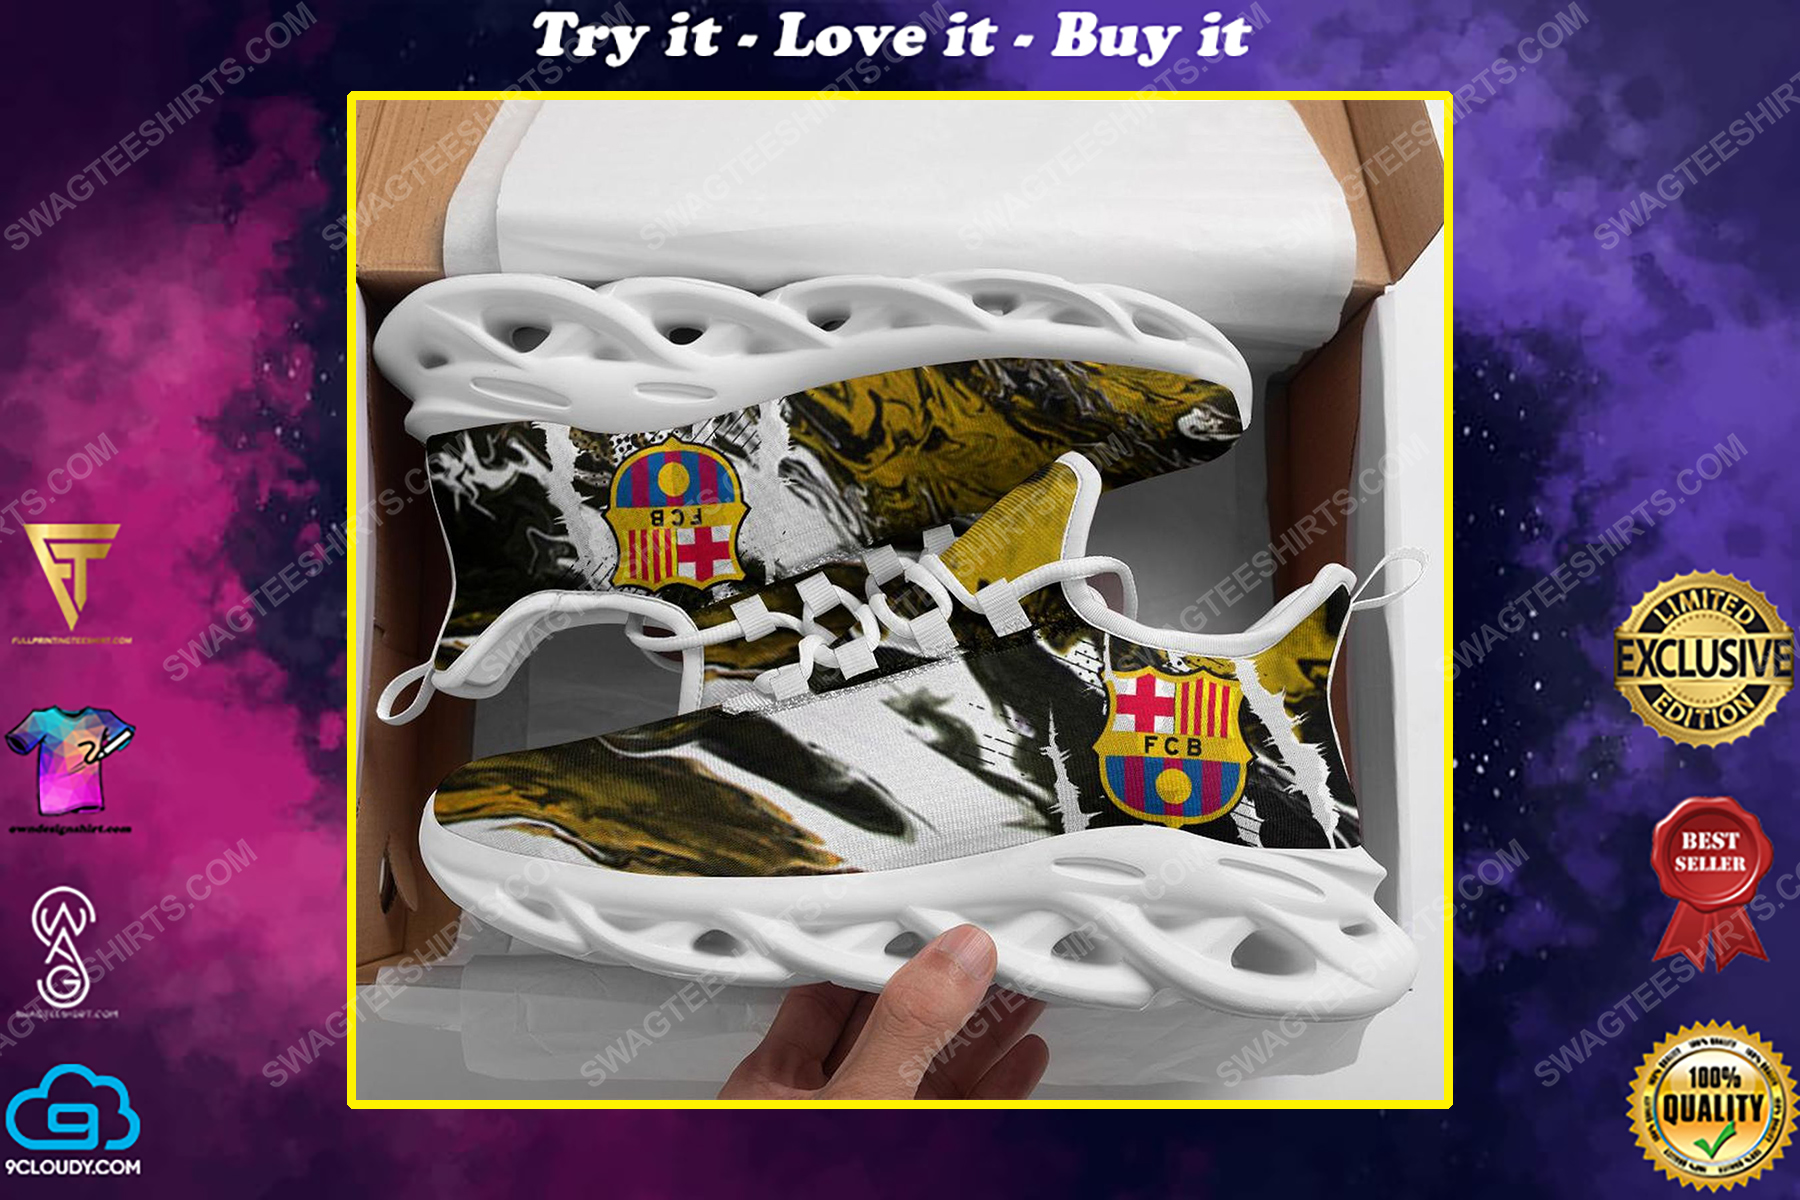 Football club barcelona max soul shoes